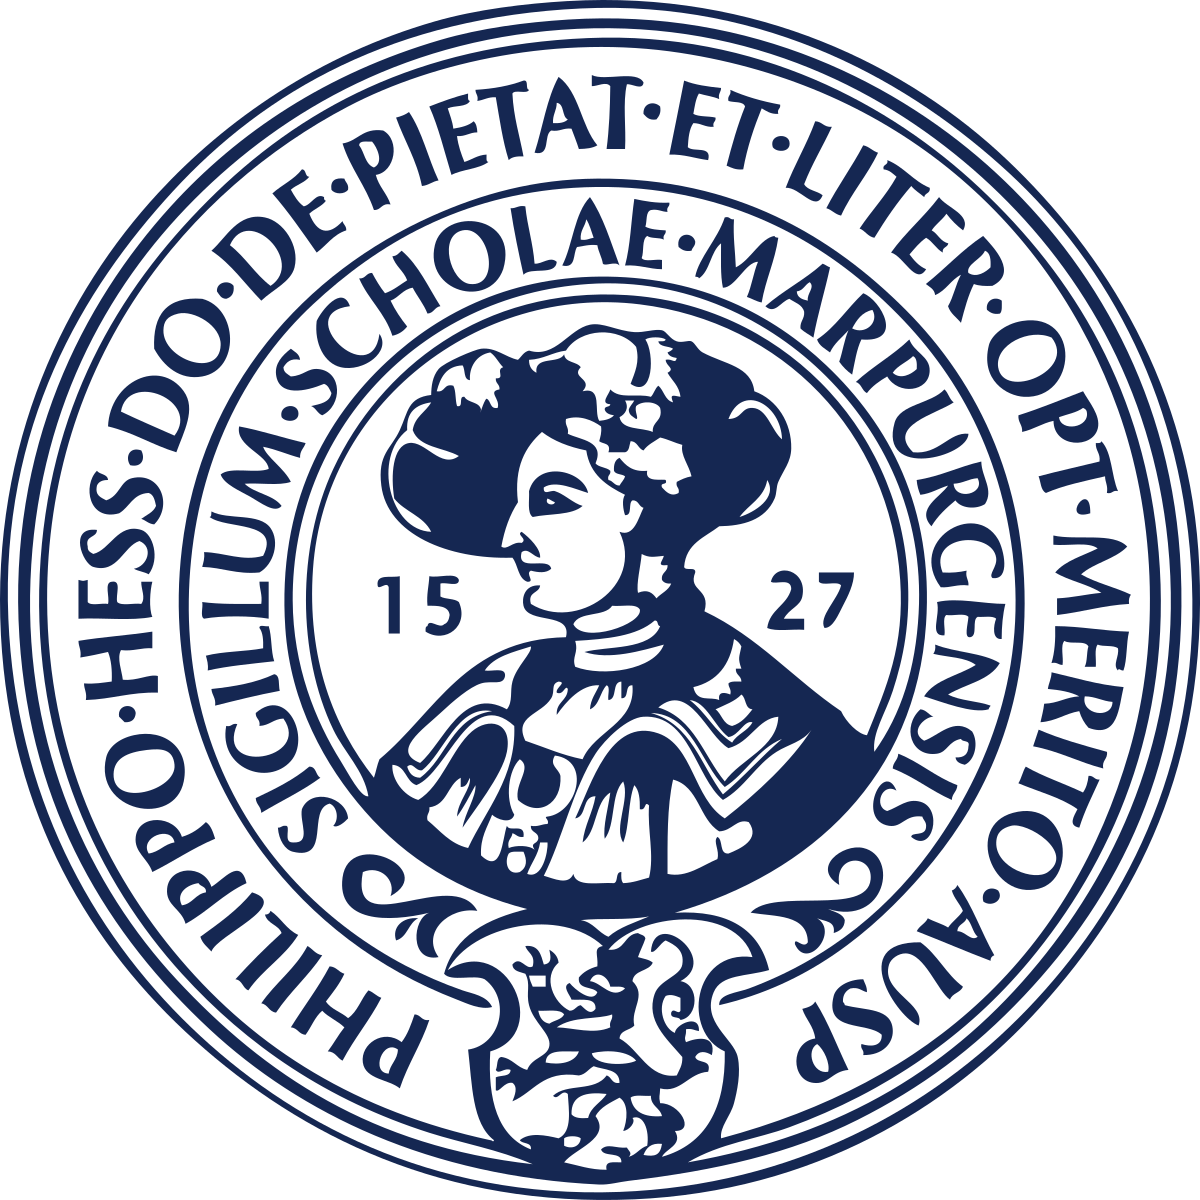 University of Marburg emblem